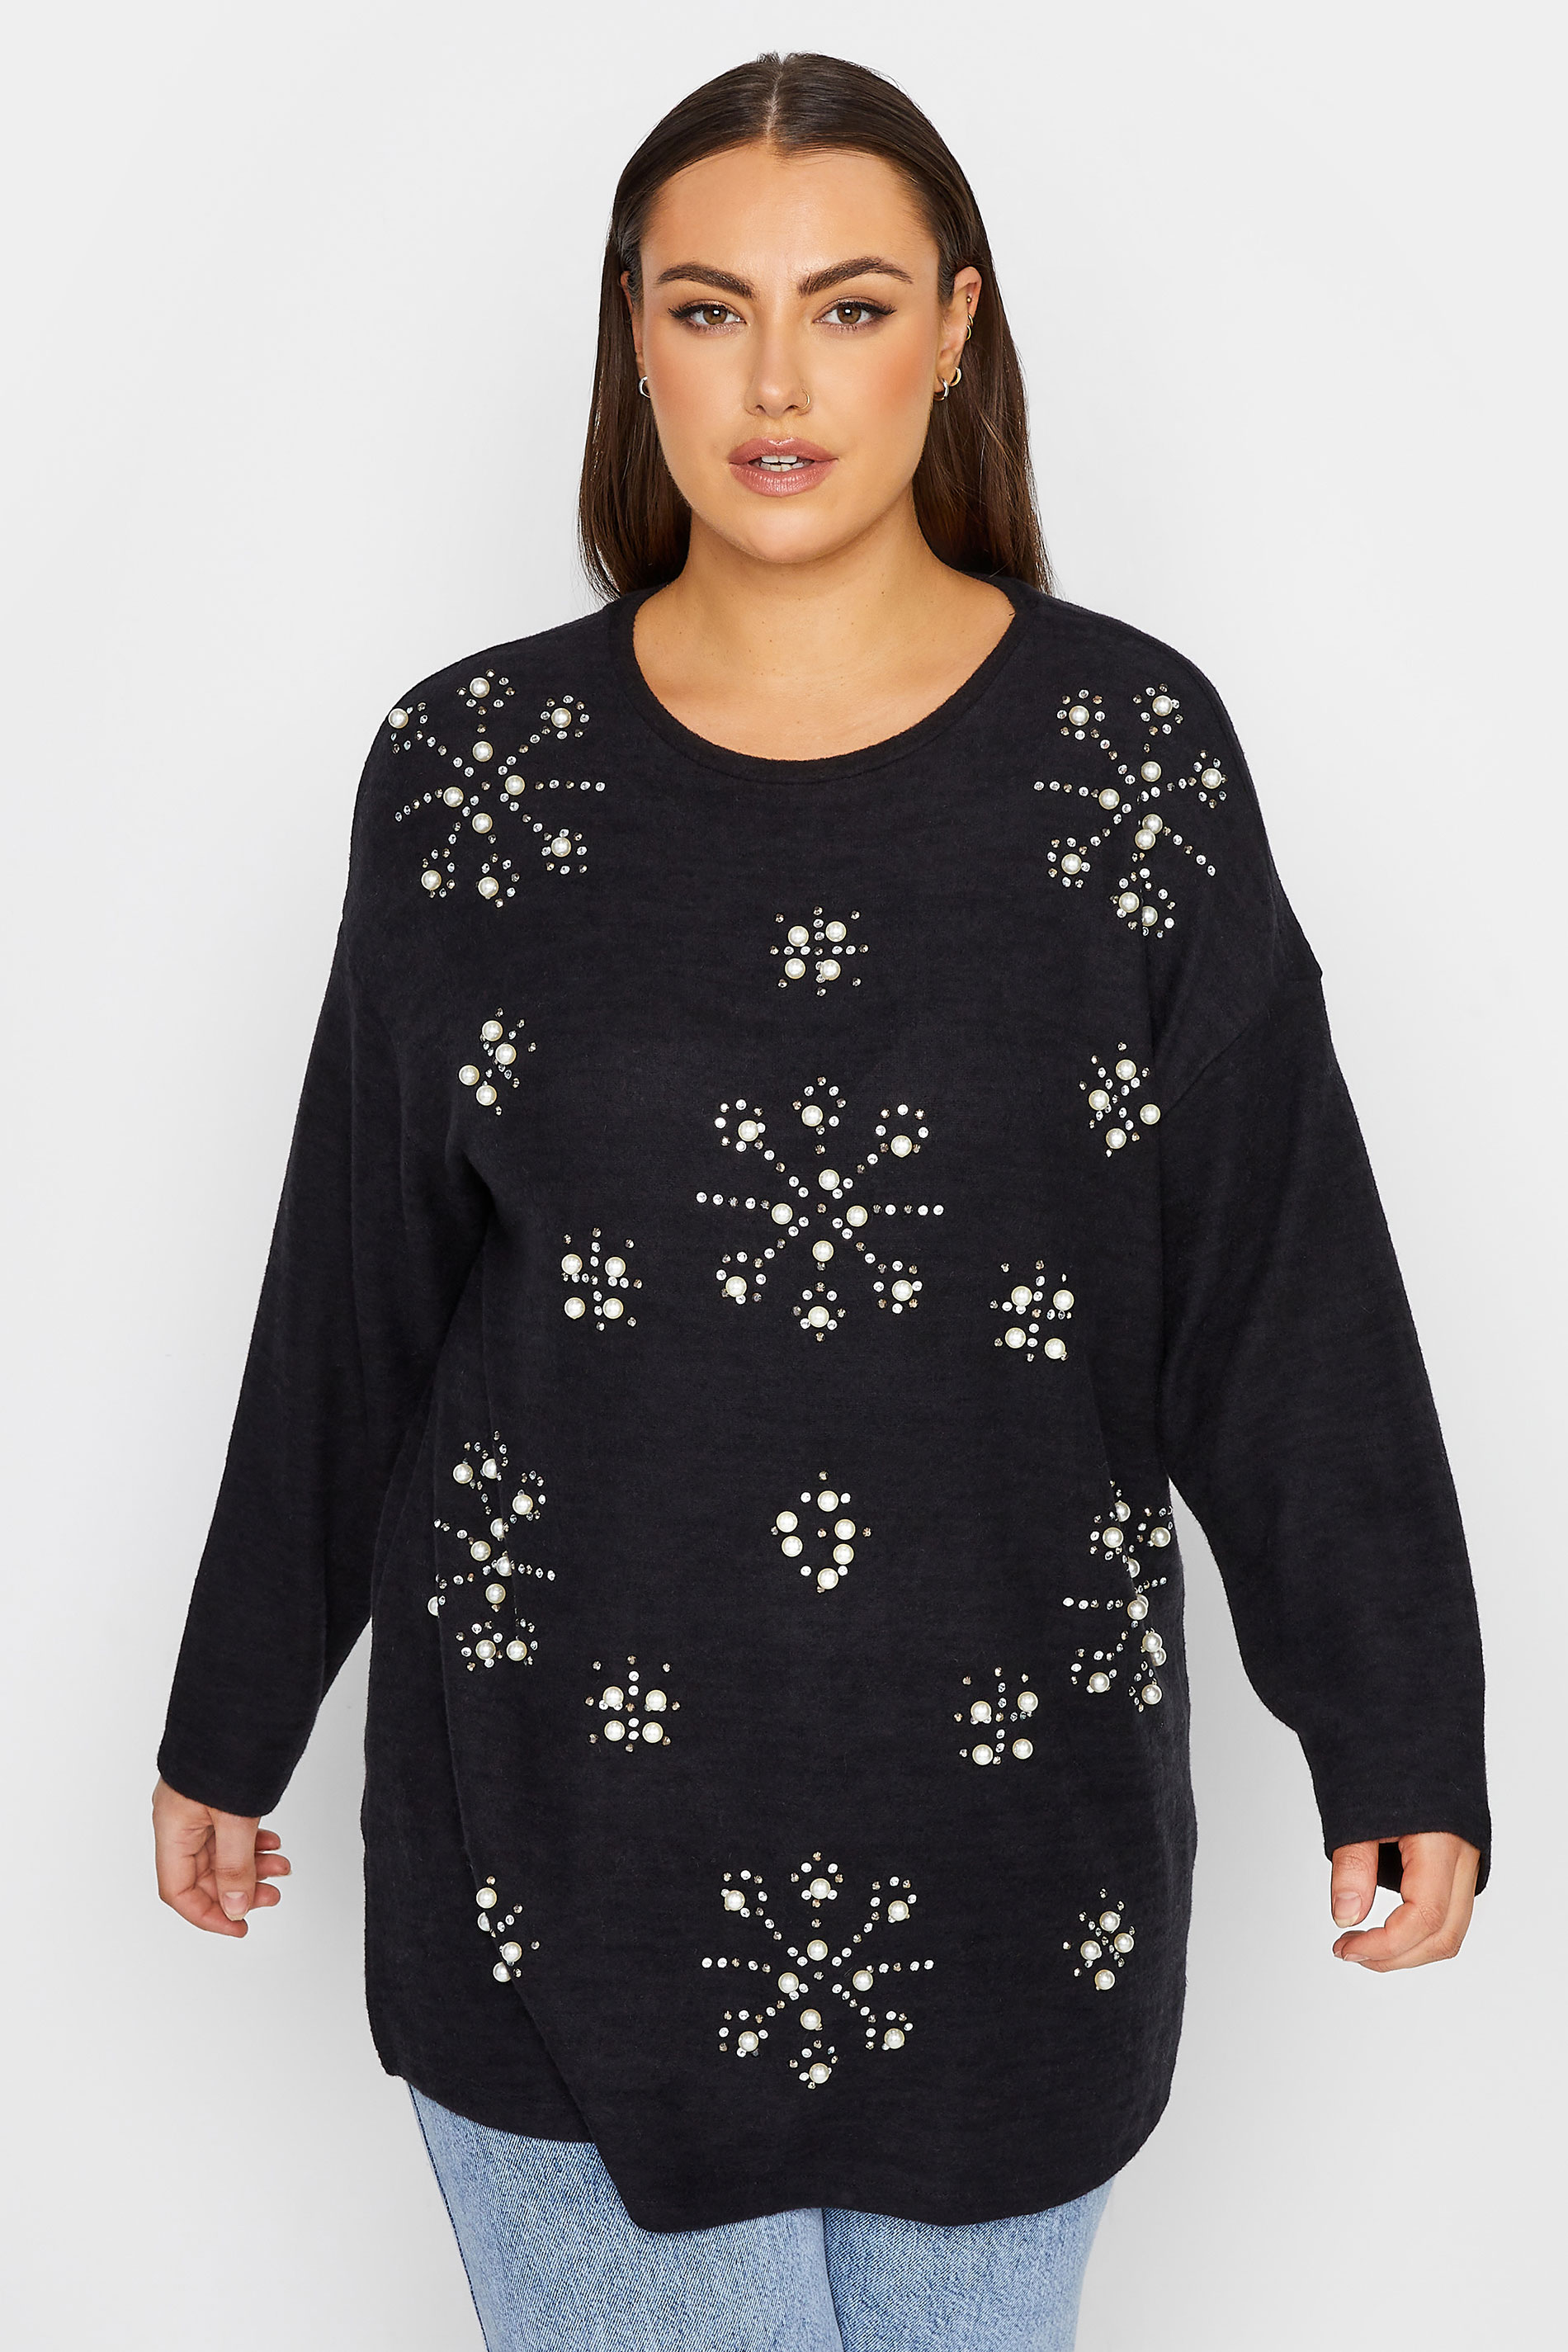 YOURS LUXURY Curve Black Stud & Pearl Embellished Sweatshirt | Yours Clothing 2